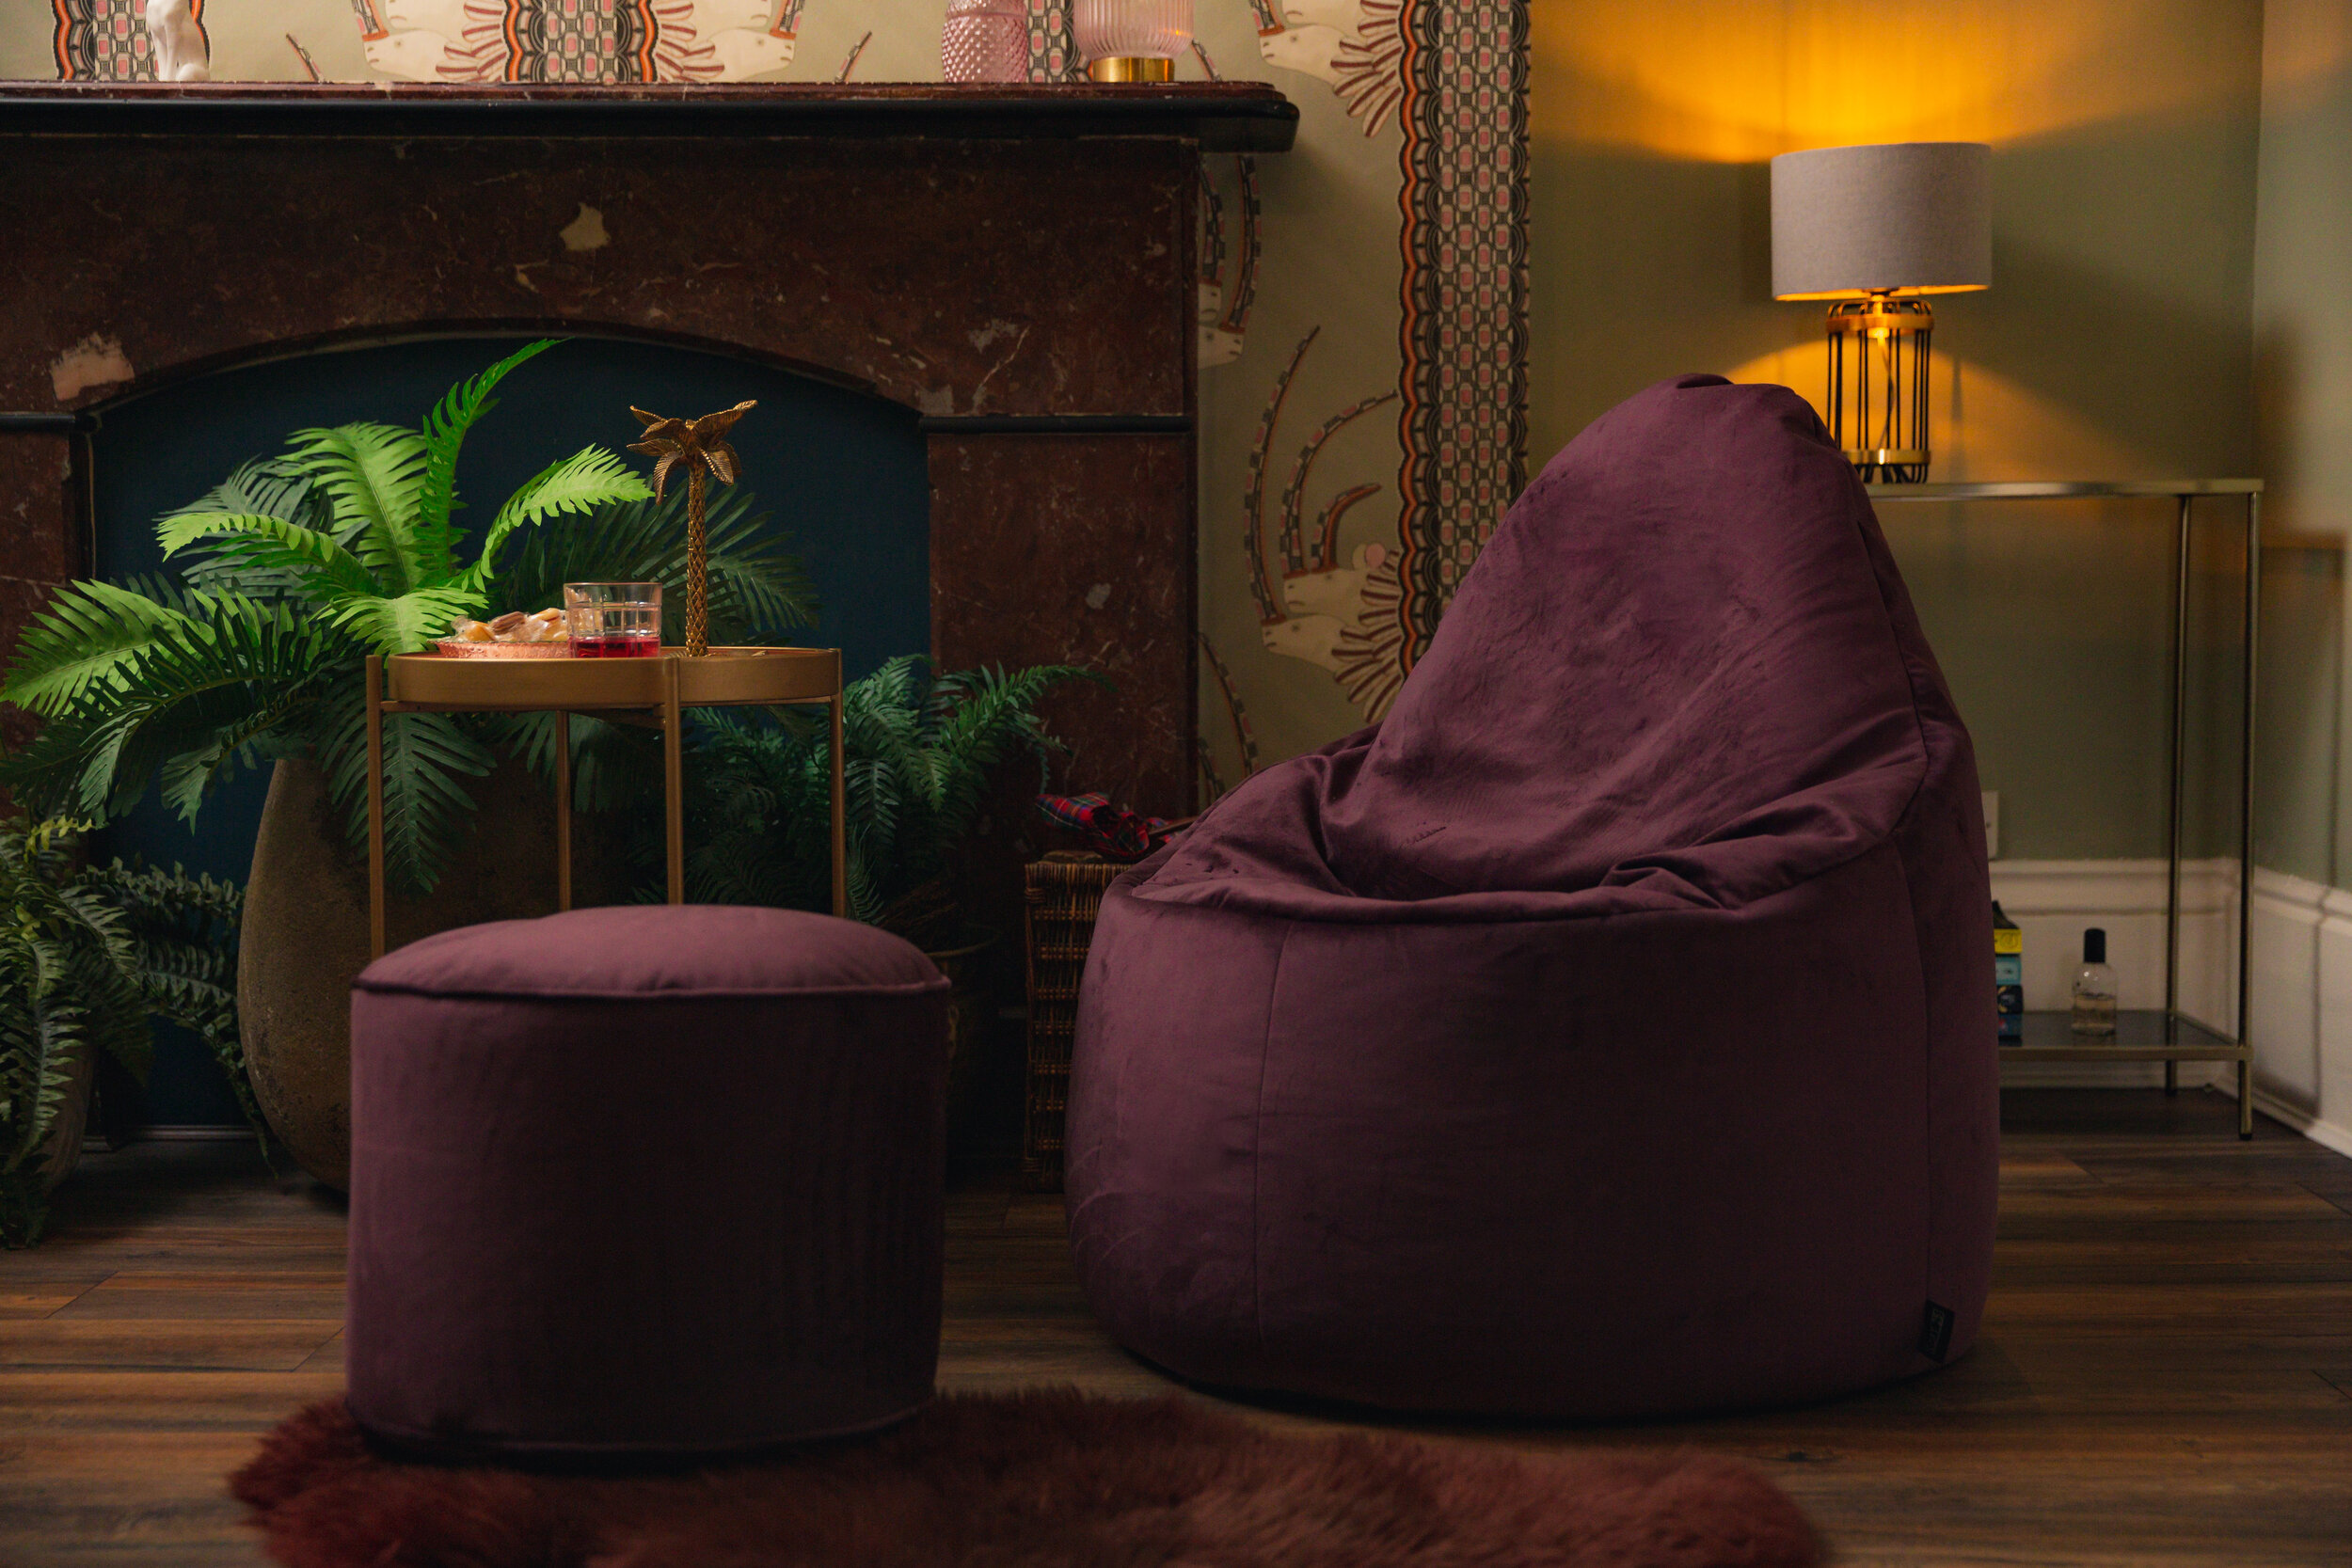 Living Room Indoor Beanbag Footrest Seat Silver Ergonomically Designed Lightweight Ottoman Pouffe Loft 25 Bean Bag Cube Soft Luxury Footstool Chair